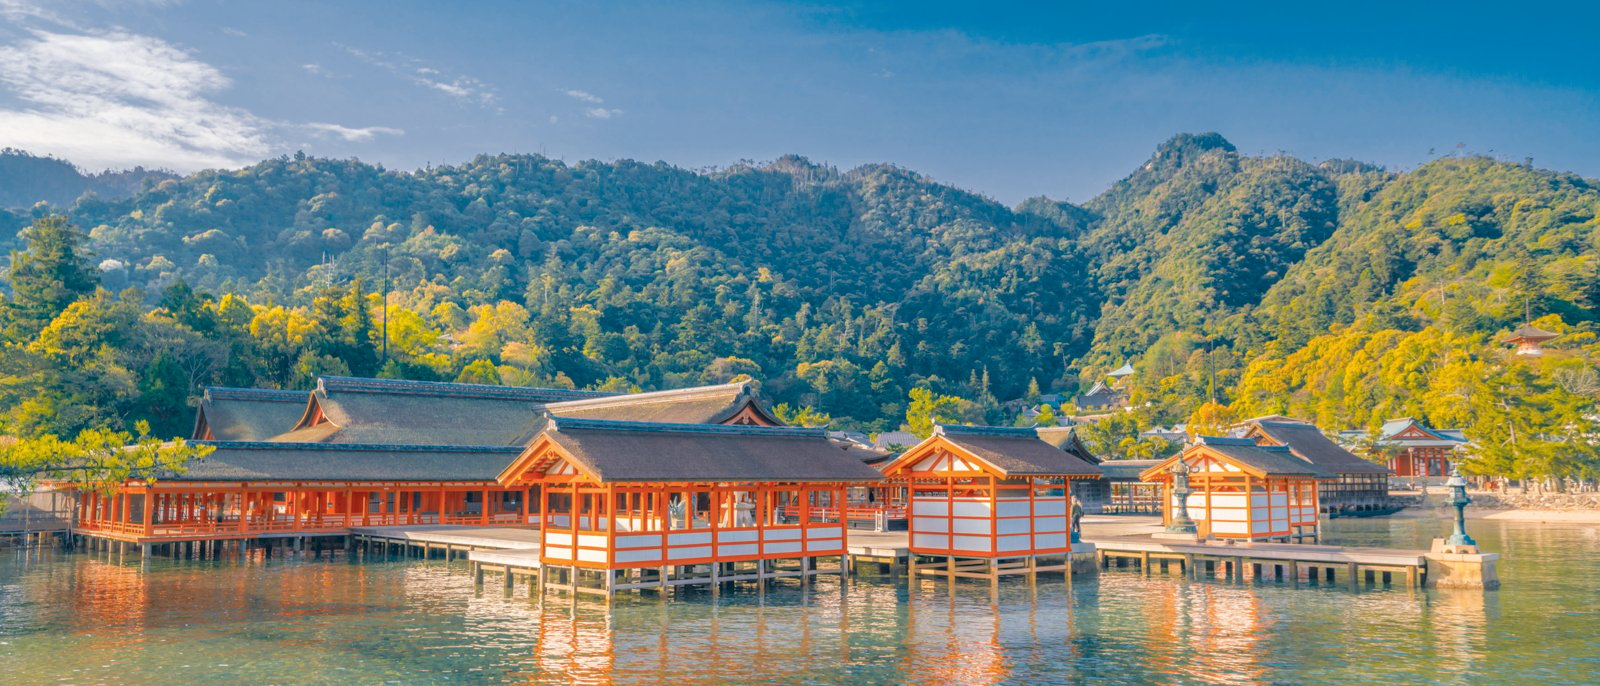 Centuries-old Itsukushima shrine on Miyajima island in Japan